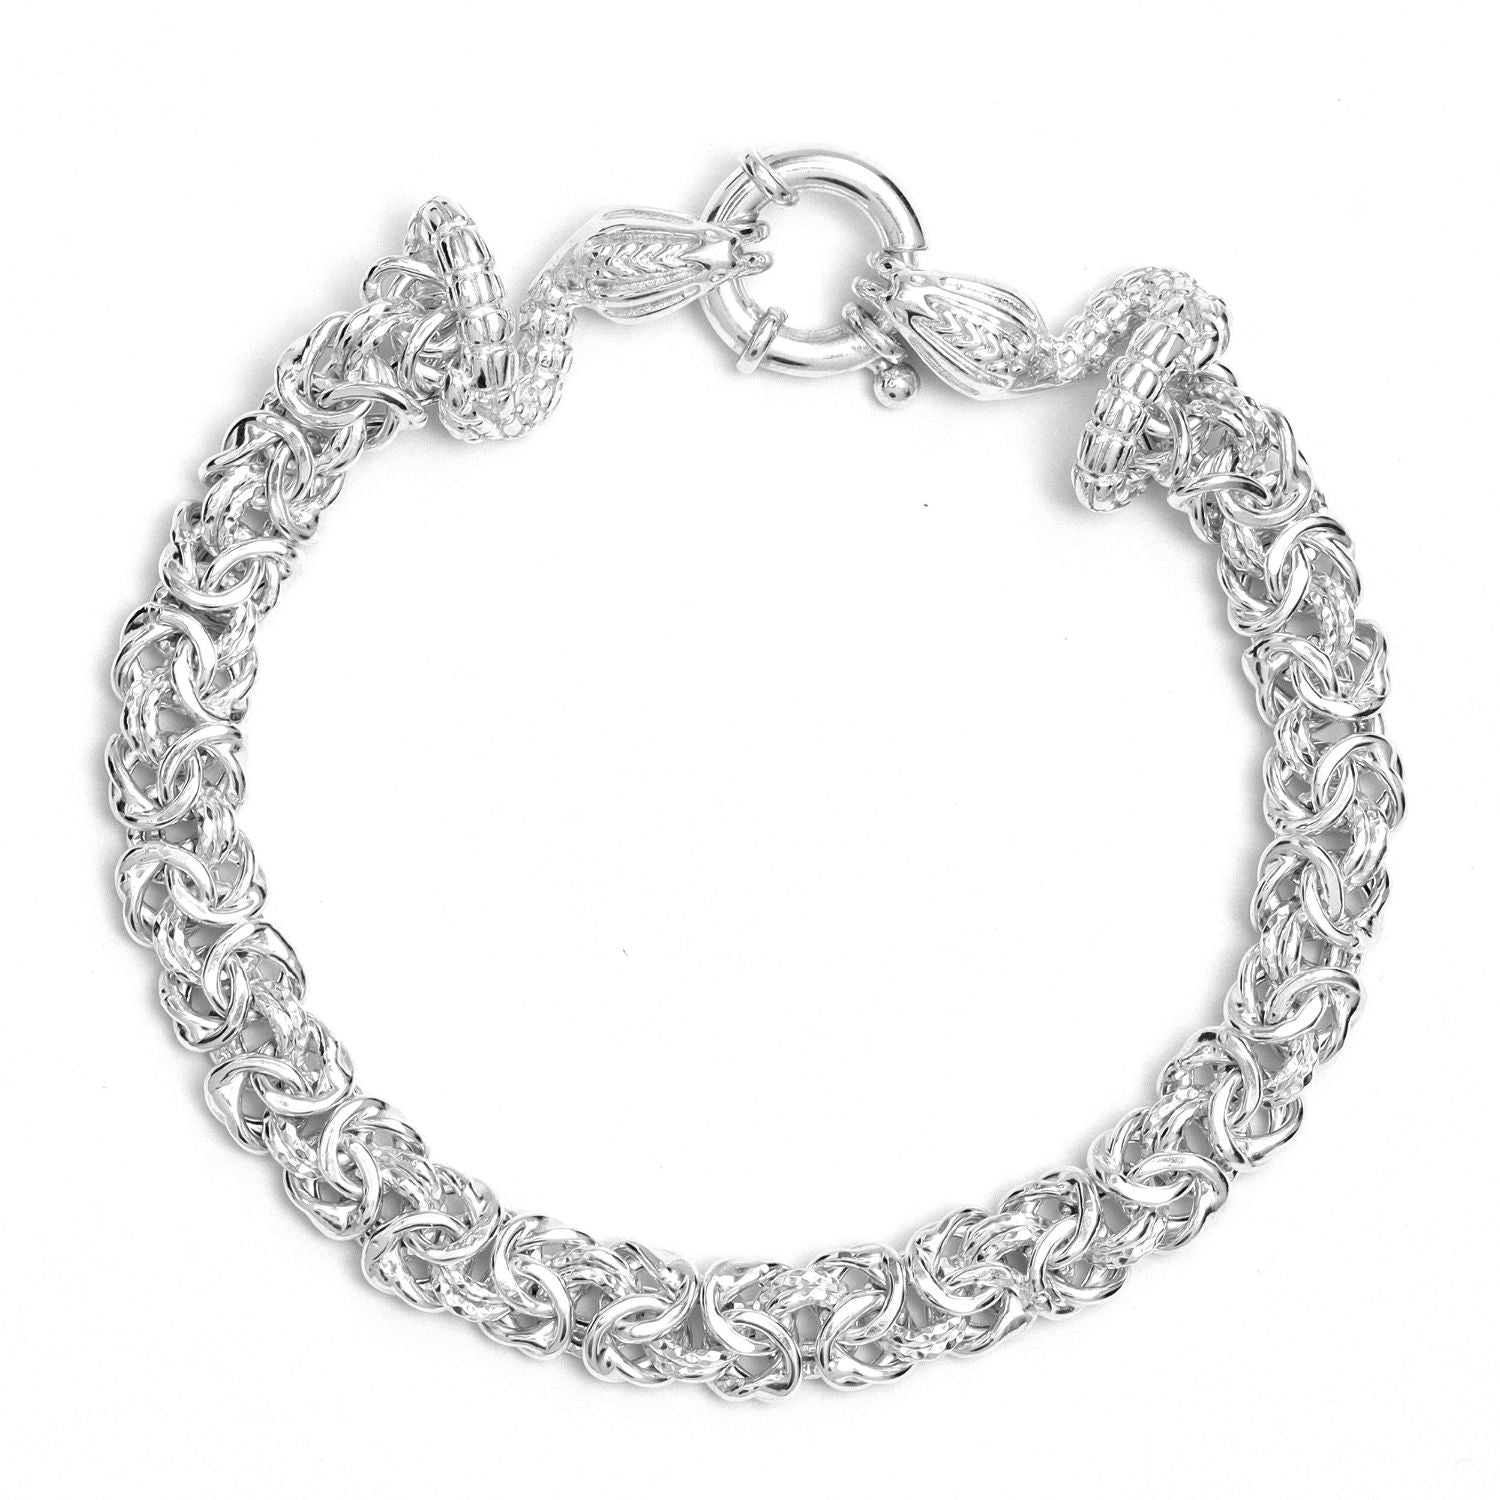 Buy BIS Hallmarked 925 Sterling Silver Snake Chain Bracelet for Men's